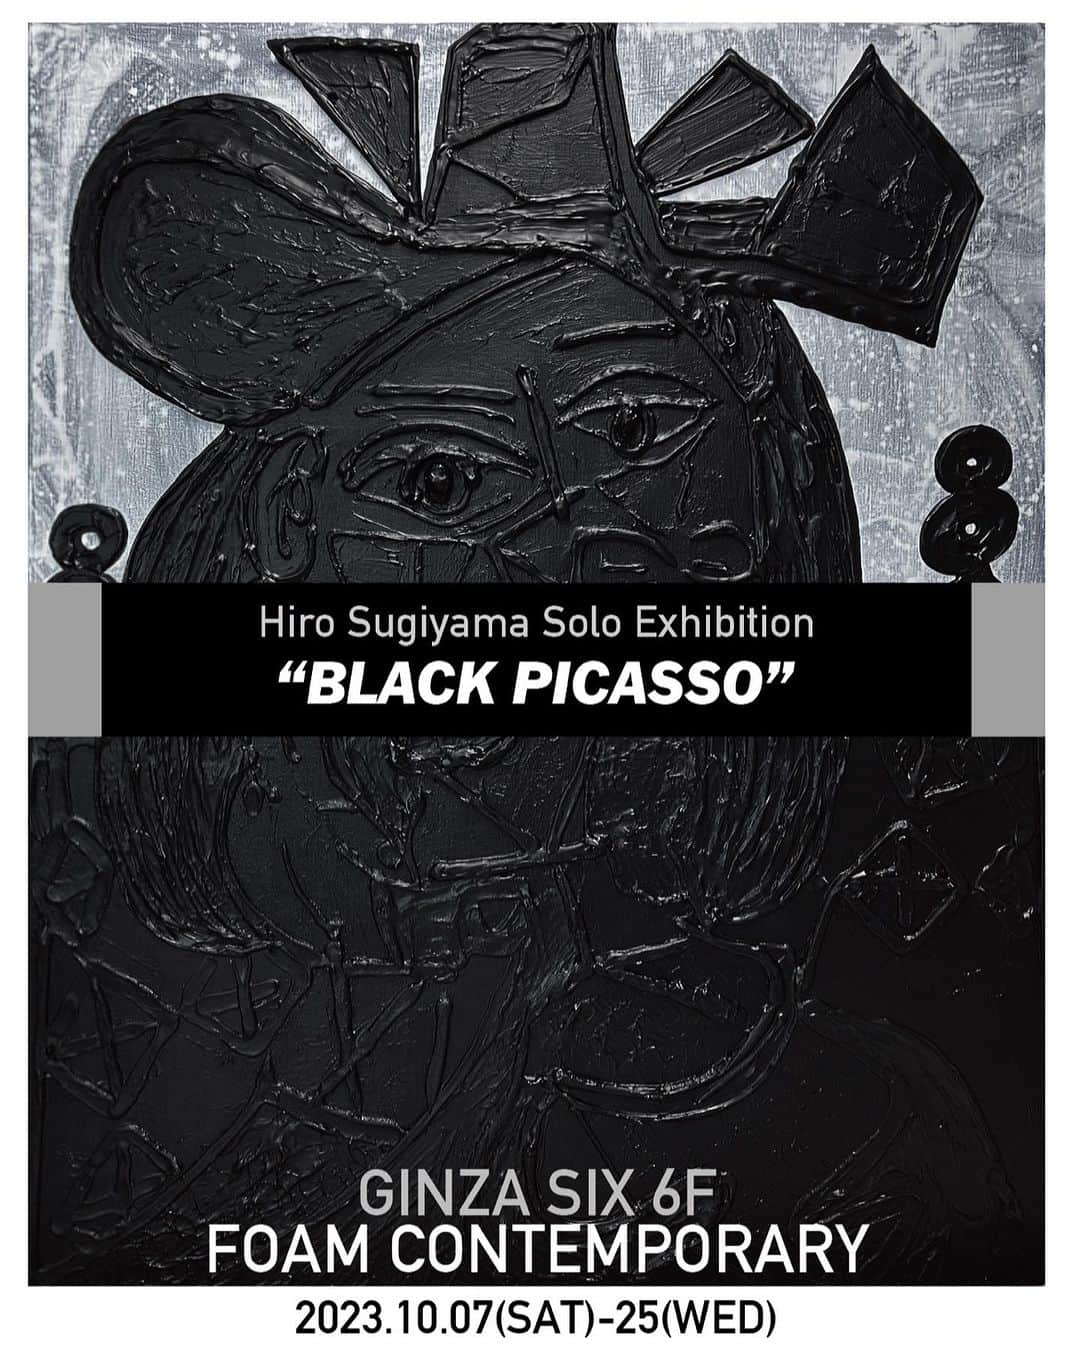 Hiro Sugiyama enlightenmentのインスタグラム：「- ヒロ杉山の個展「BLACK MOON を、2023年10月7日(土)〜10月25日(水)で開催致します。 名画のモチーフを黑いシルエッ トとして描くブラックペインティングシリーズの新作を公開。 場所：銀座 蔦屋書店(東京都中央区 GINZA SIX 6F)  店内アートスペースFOAM CONTEMPORARY  住所|〒104-0061 東京都中央区銀座6-10-1 G INZA SIX 6F 電話番号|03-3575-7755  https://store.tsite.jp/ginza/blog/art/36060-1821050922.html」